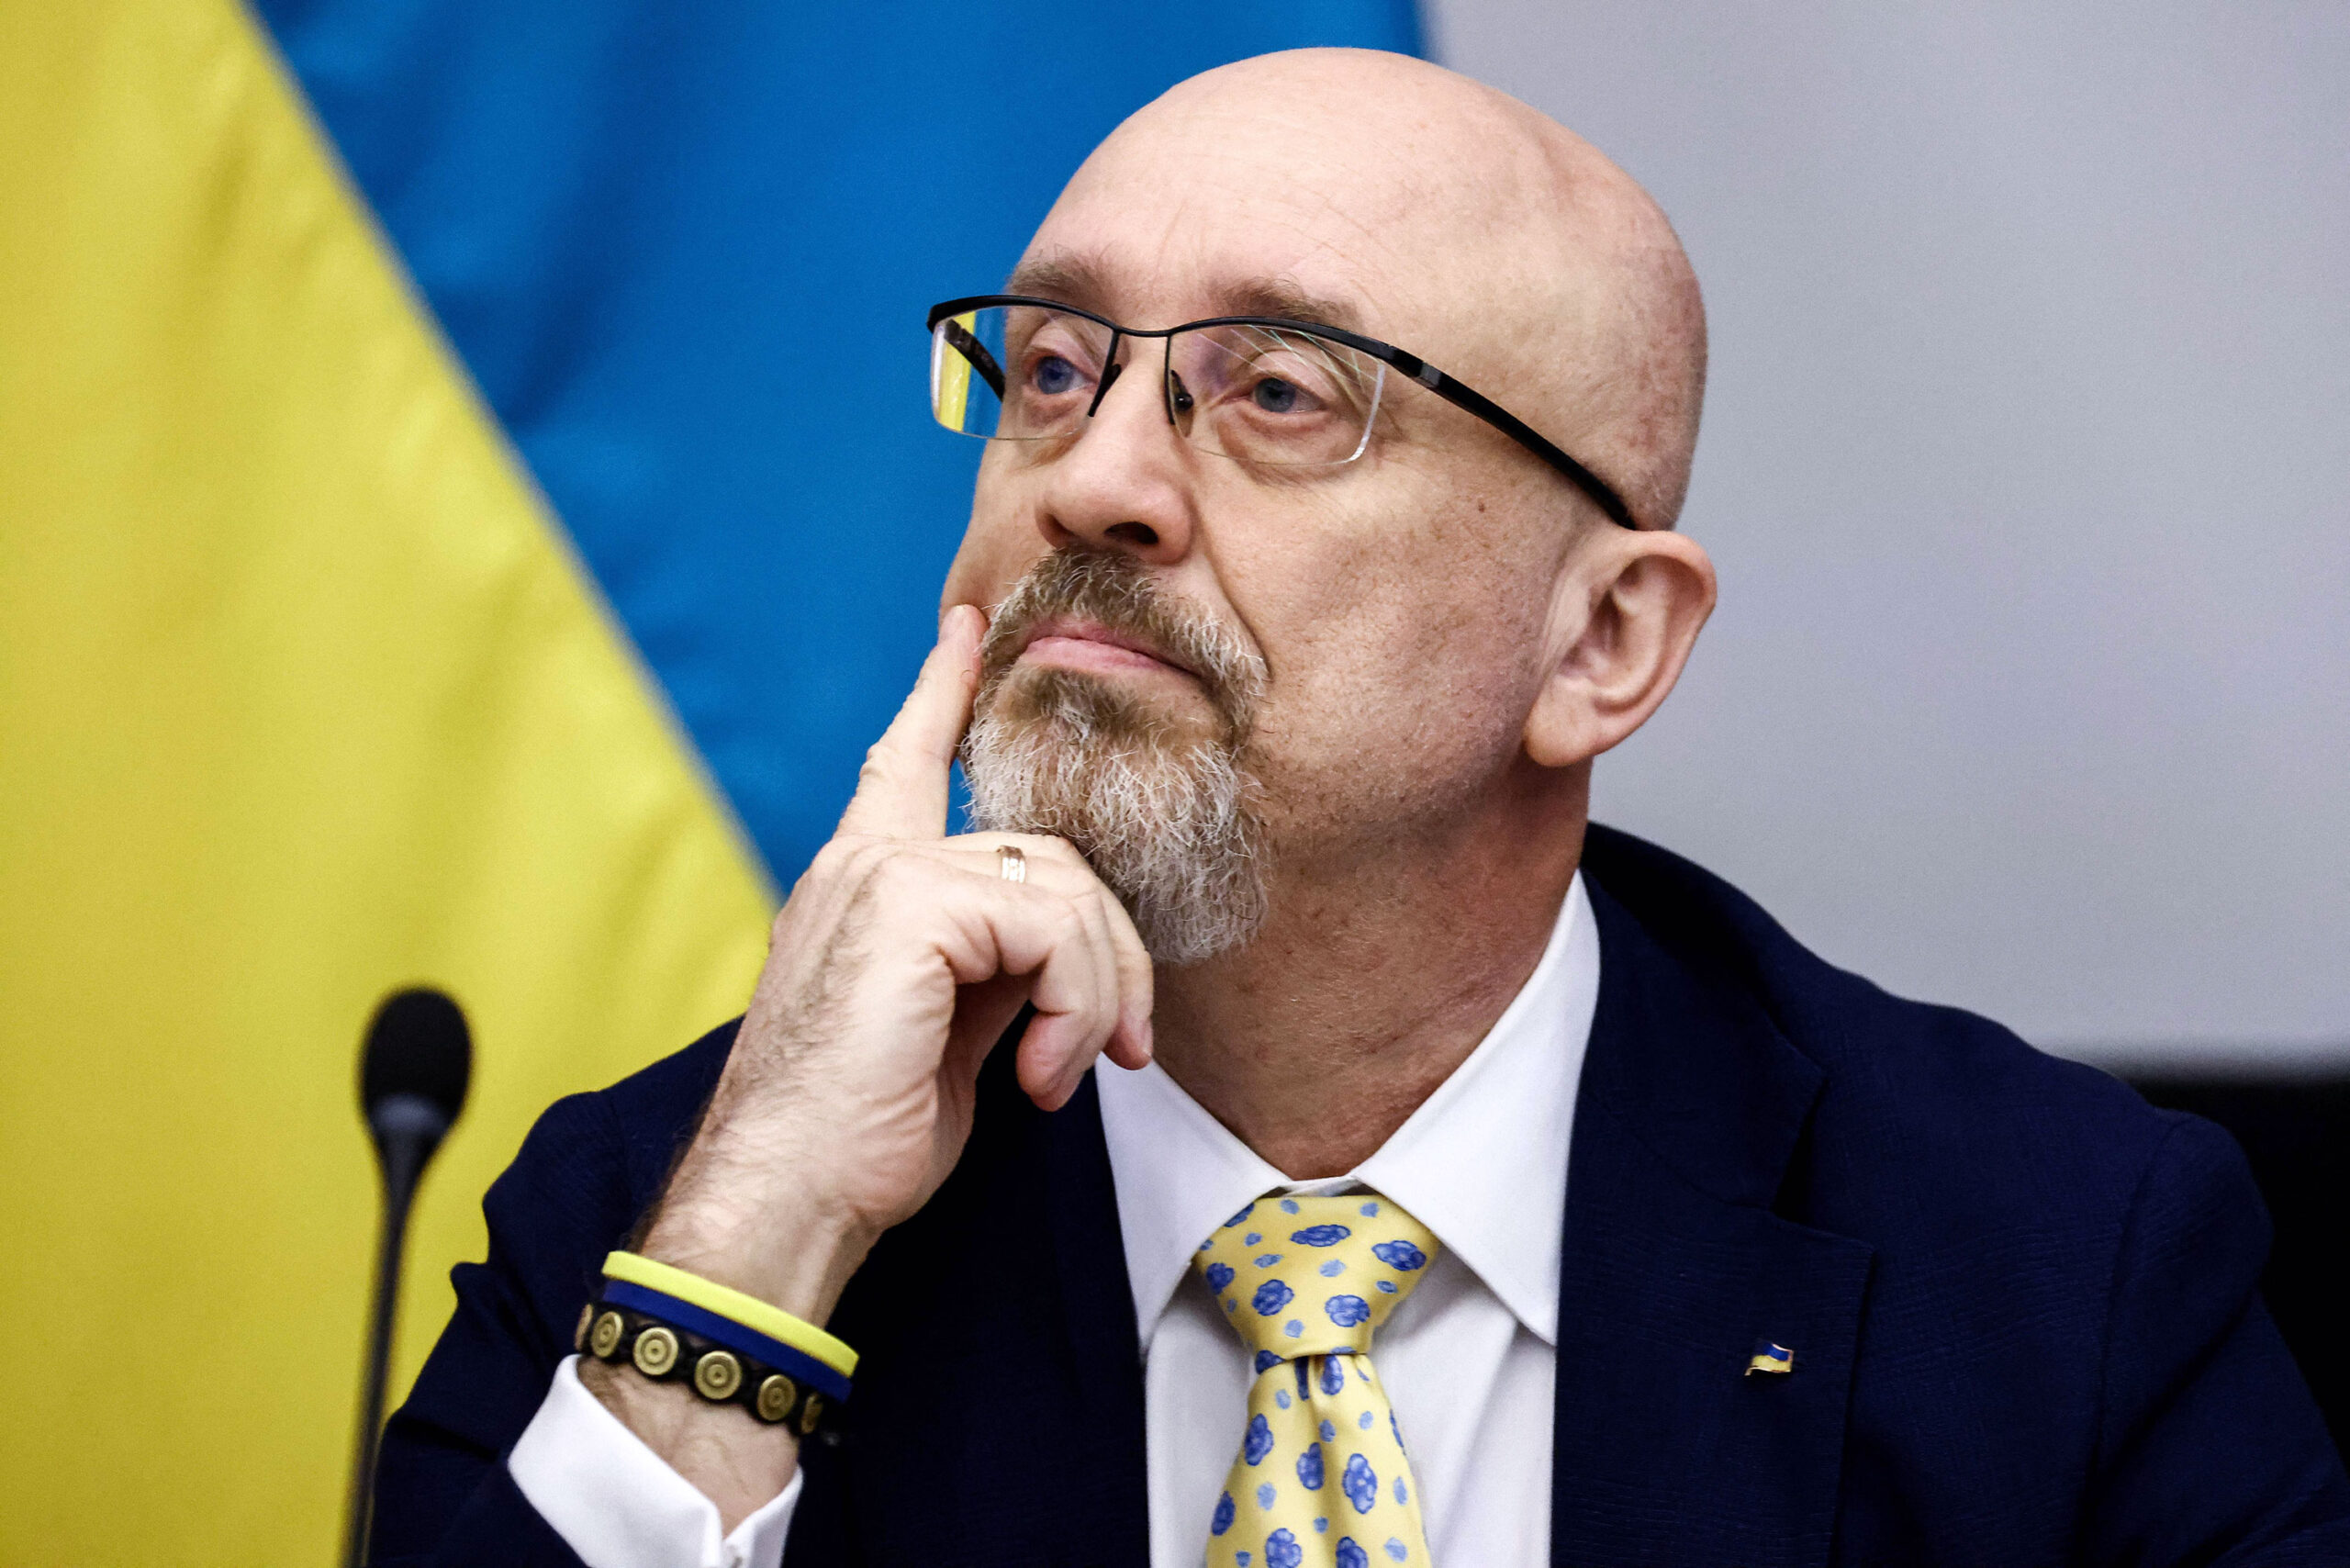 Ukraine is auditing its military amid anti-corruption push, defense minister says